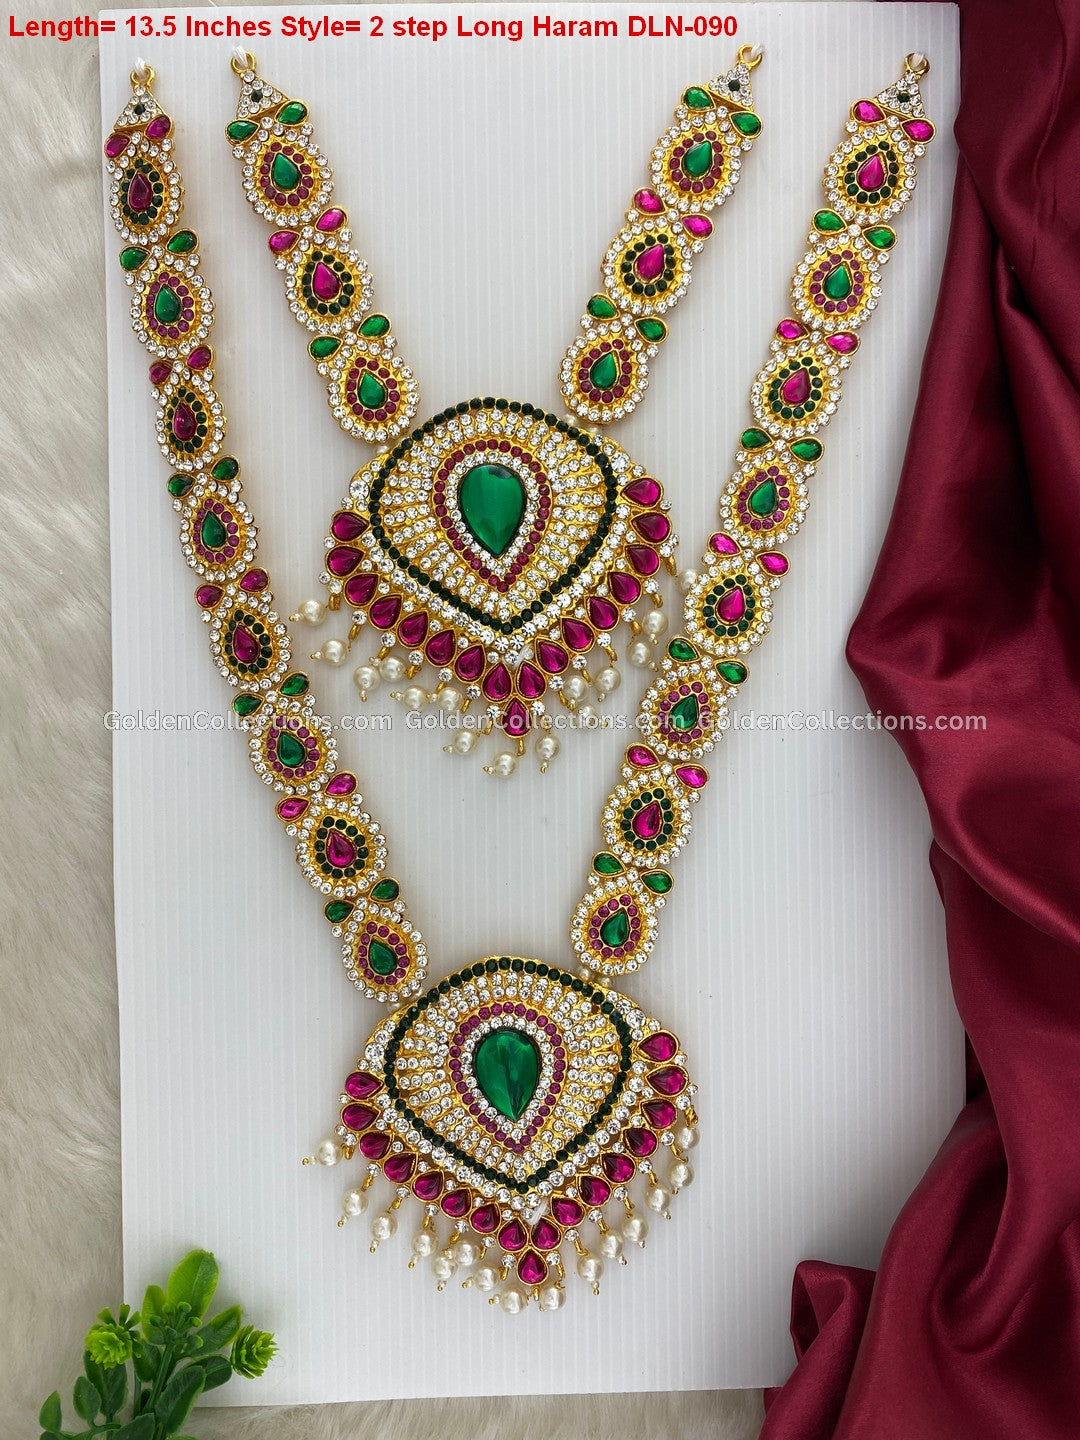 Divine Aura Long Haram - Hindu God Jewellery DLN-090